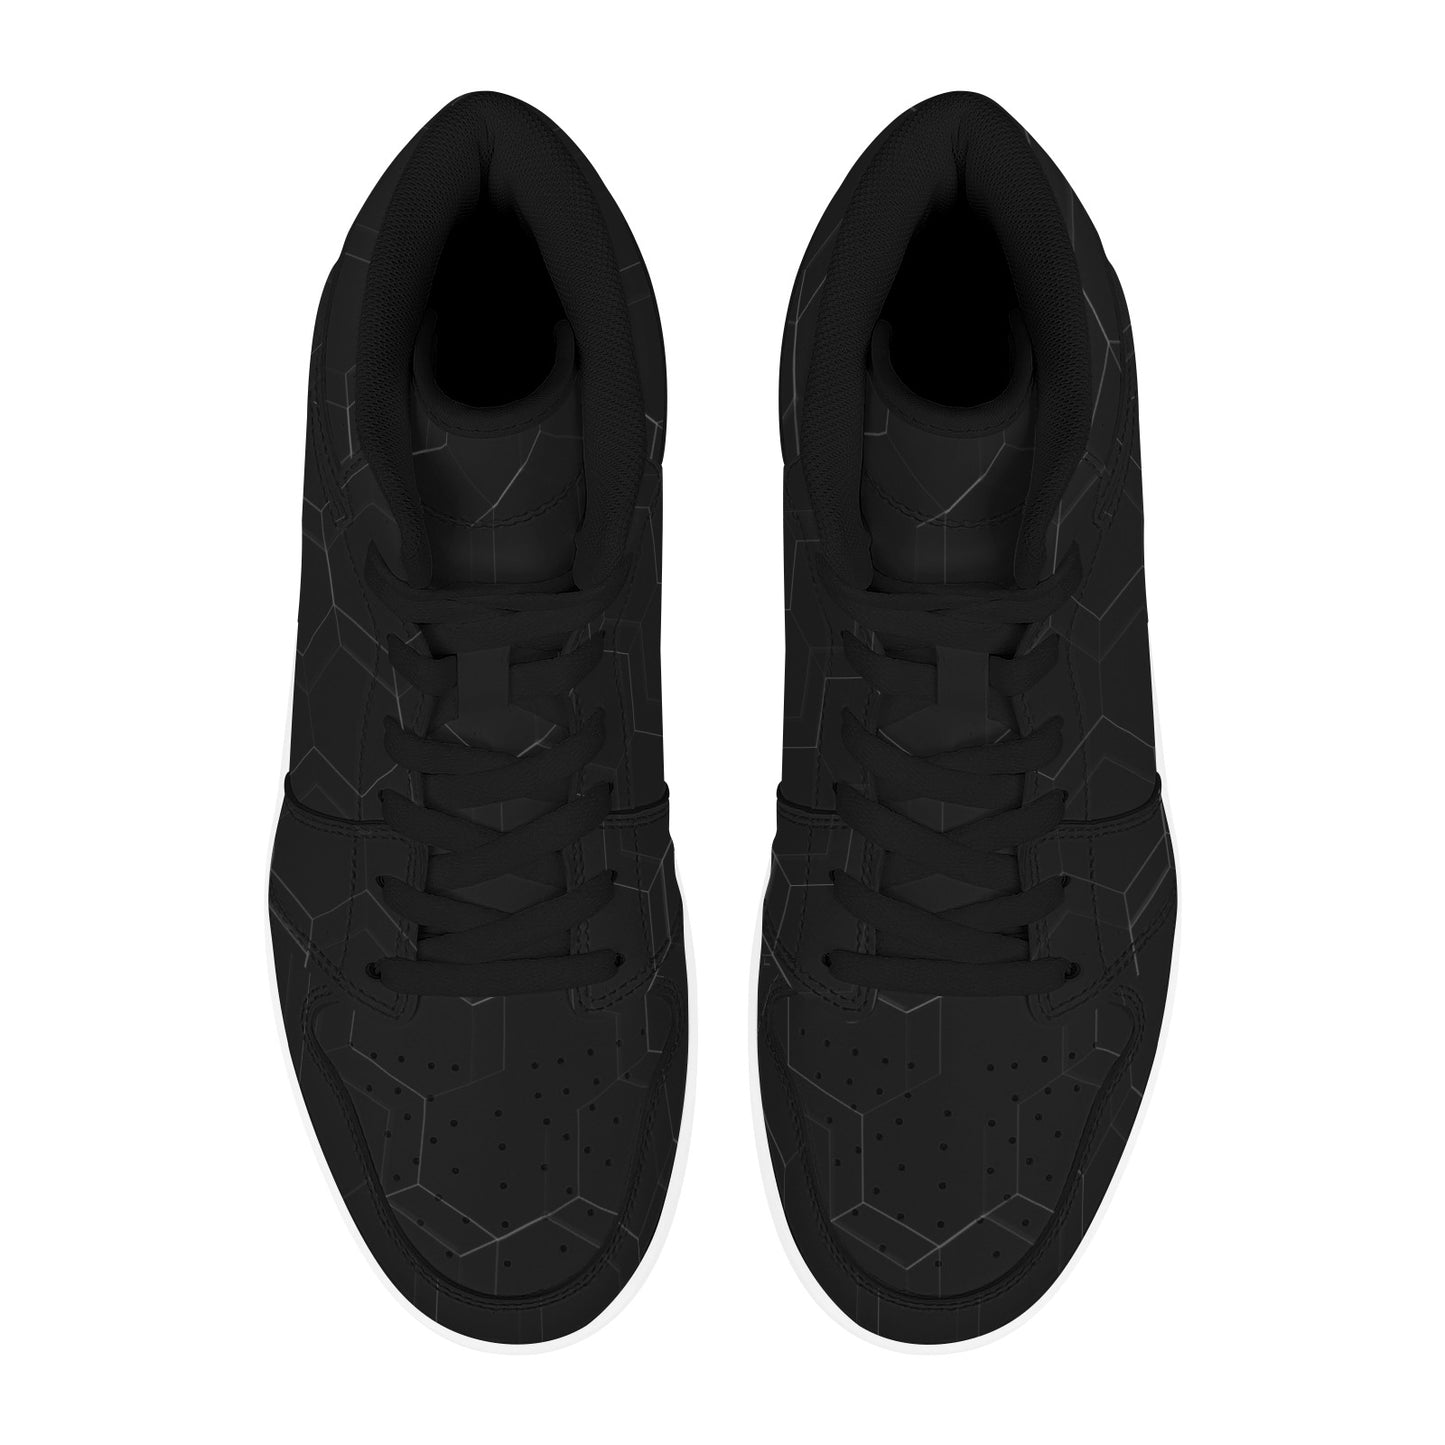 Black High Top Sneakers Black Geometric Pattern HIgh Top Sneakers Men's High Top Sneakers